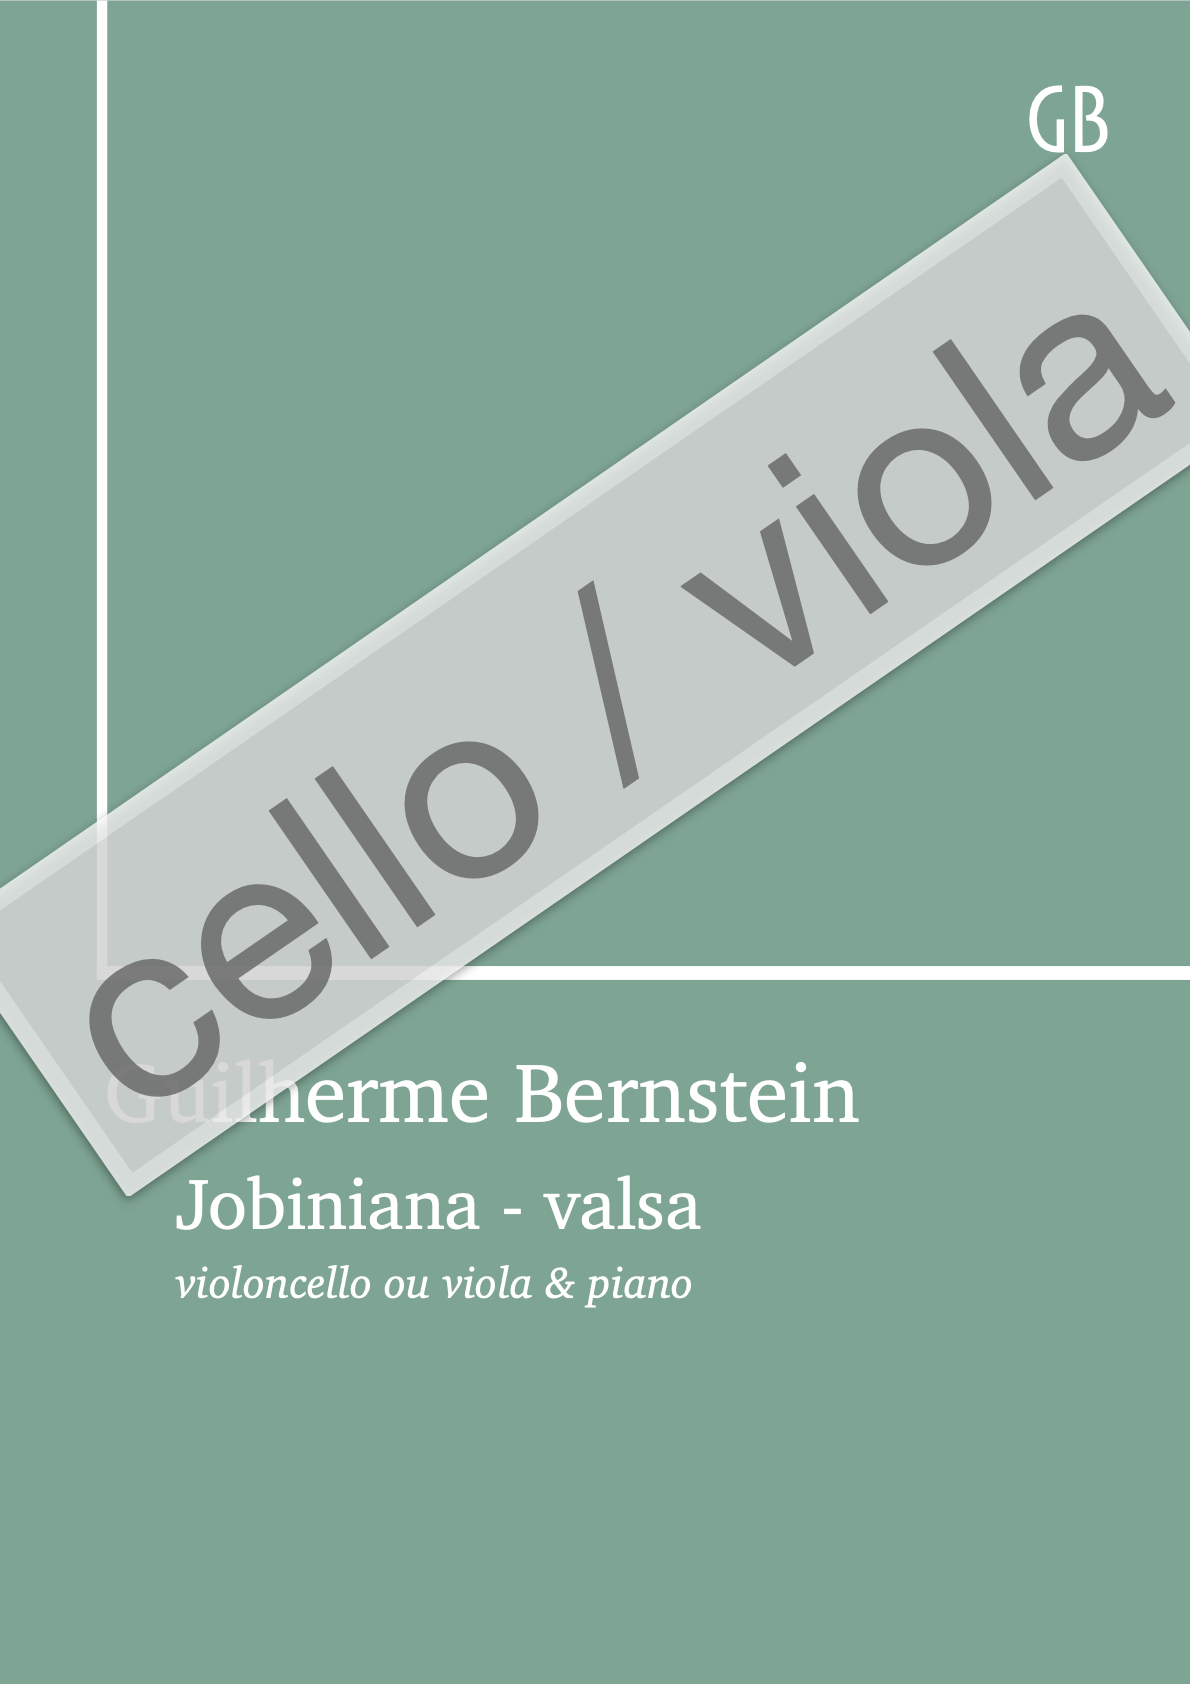 Jobiniana sample cover